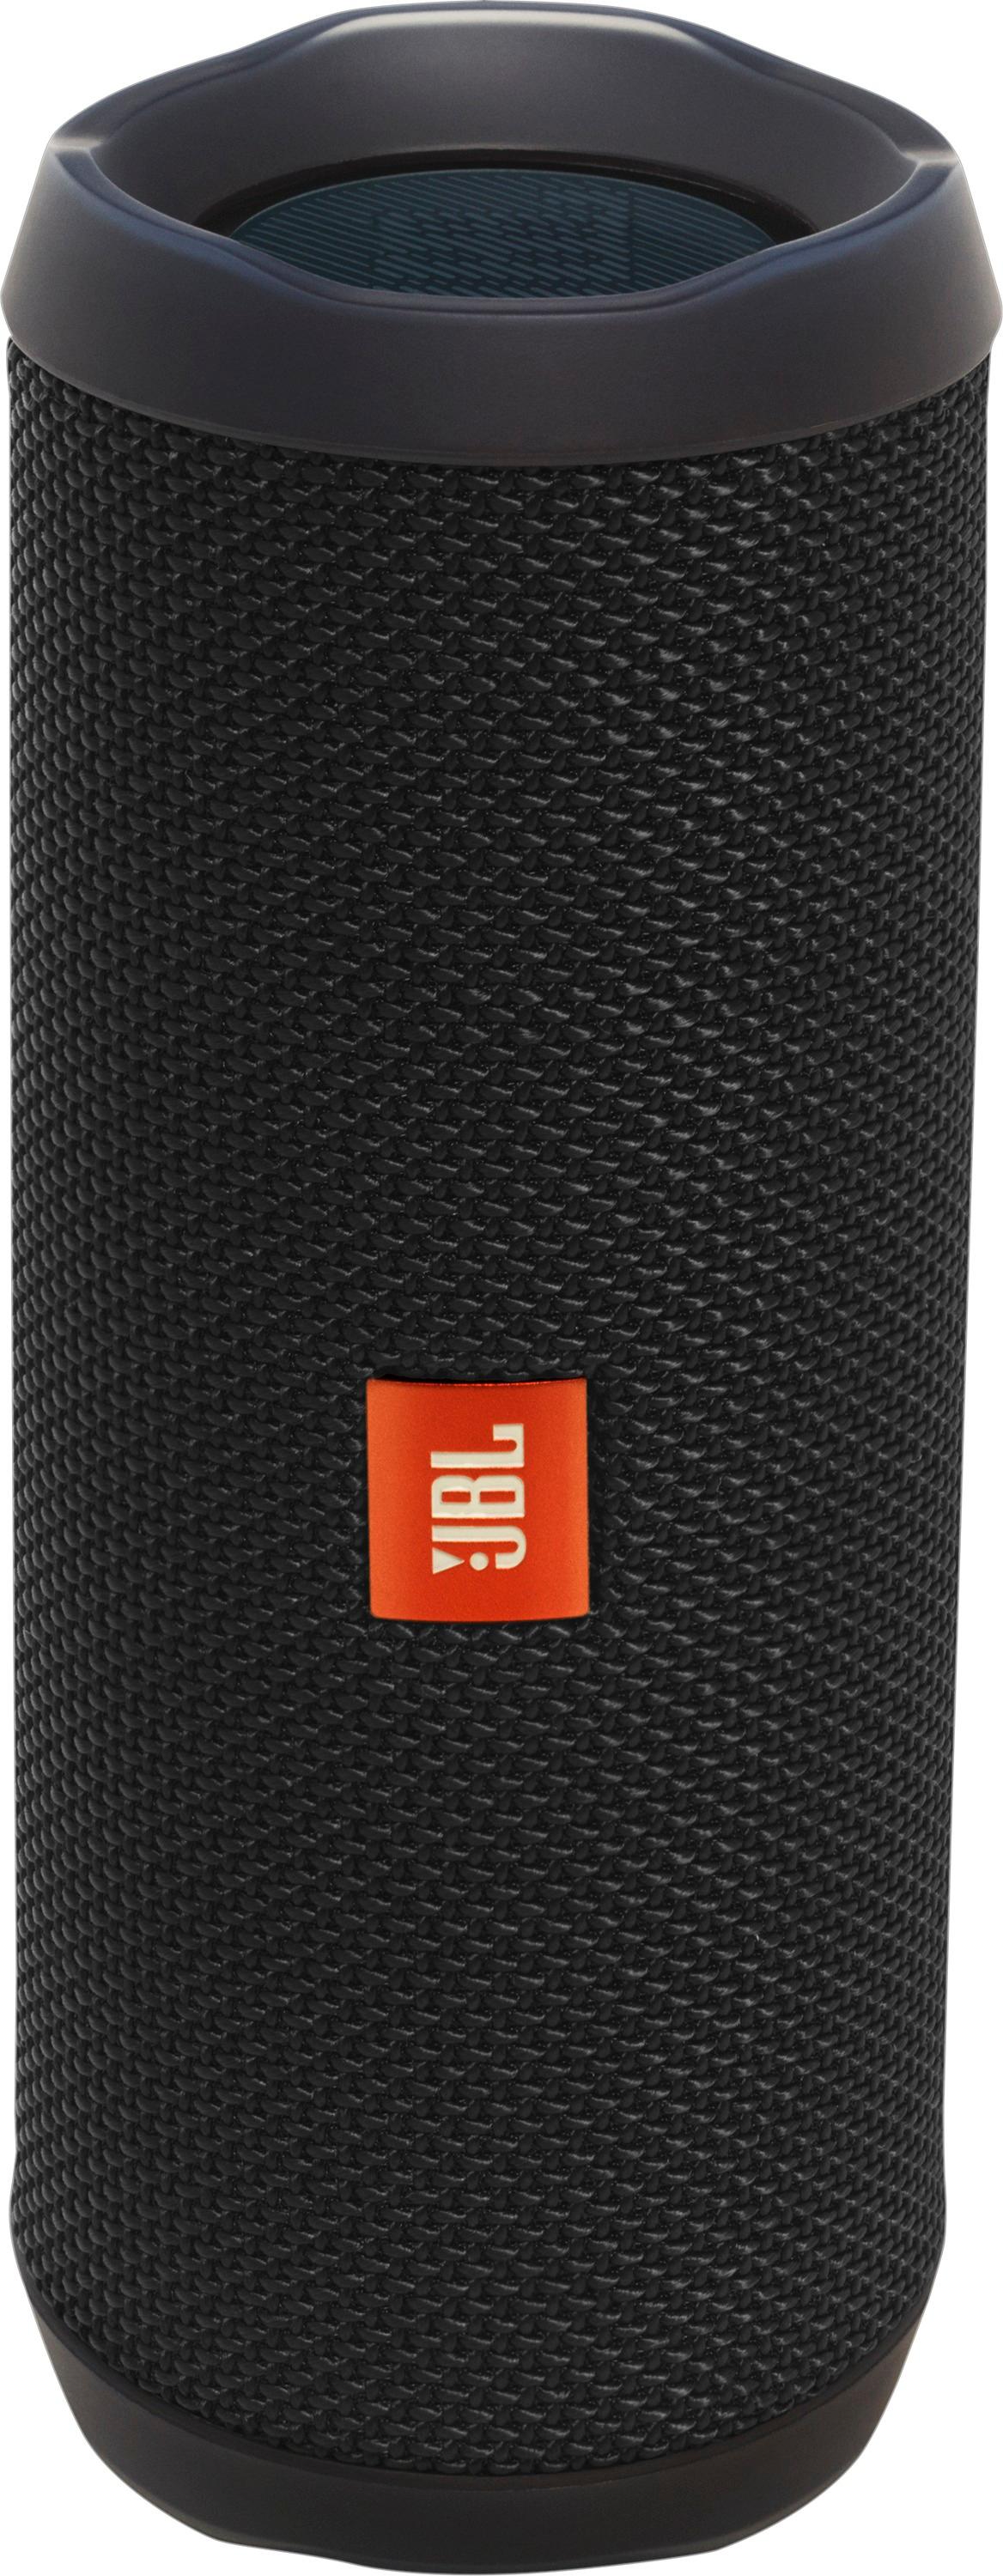 Ulykke Korea Crack pot JBL Flip 4 Portable Bluetooth Speaker Black JBLFLIP4BLKAM - Best Buy